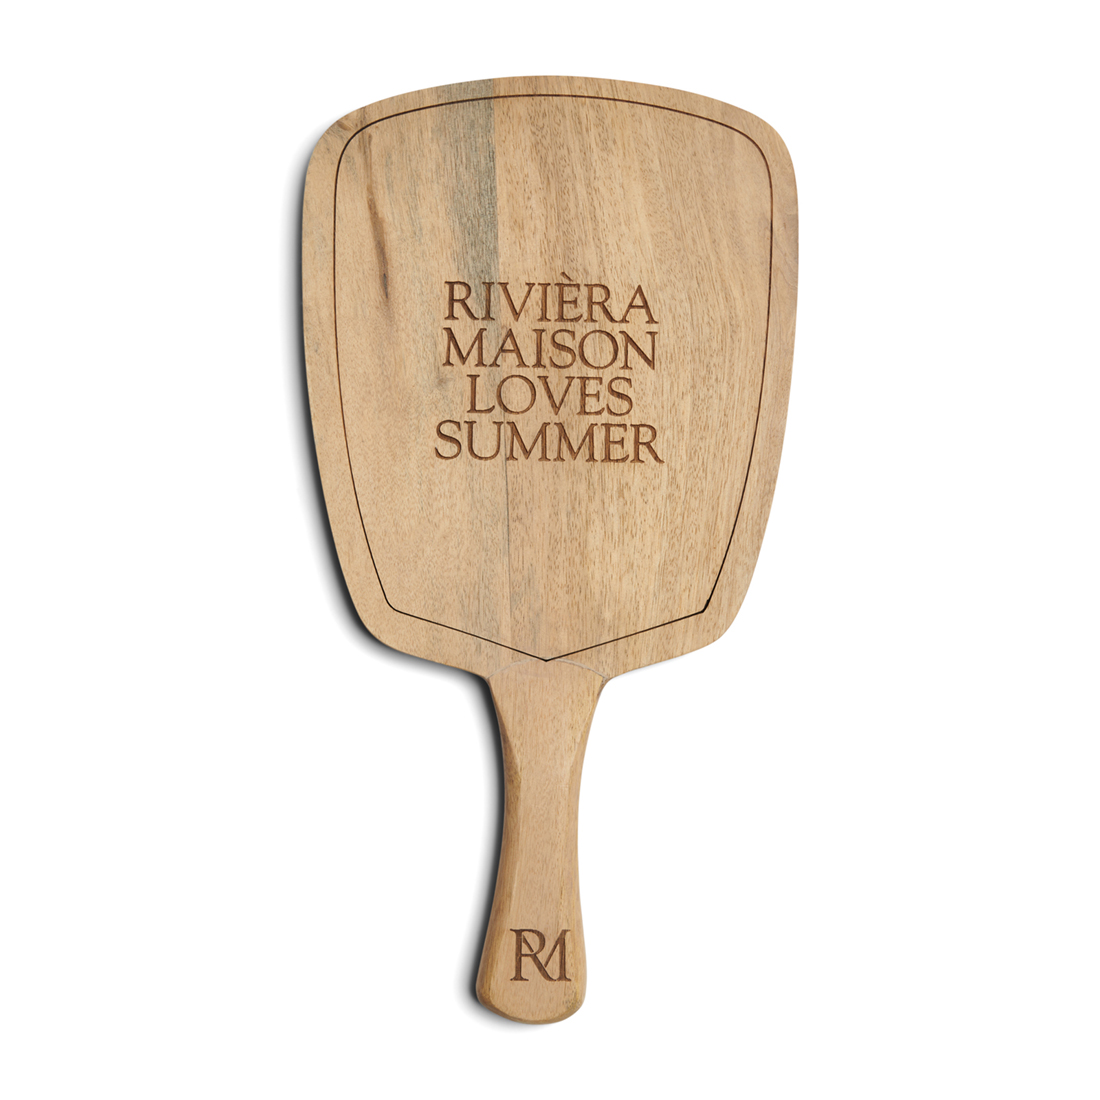 Riviera Maison RM Loves Summer Serving Board - 43.0x23.0x2.5 cm